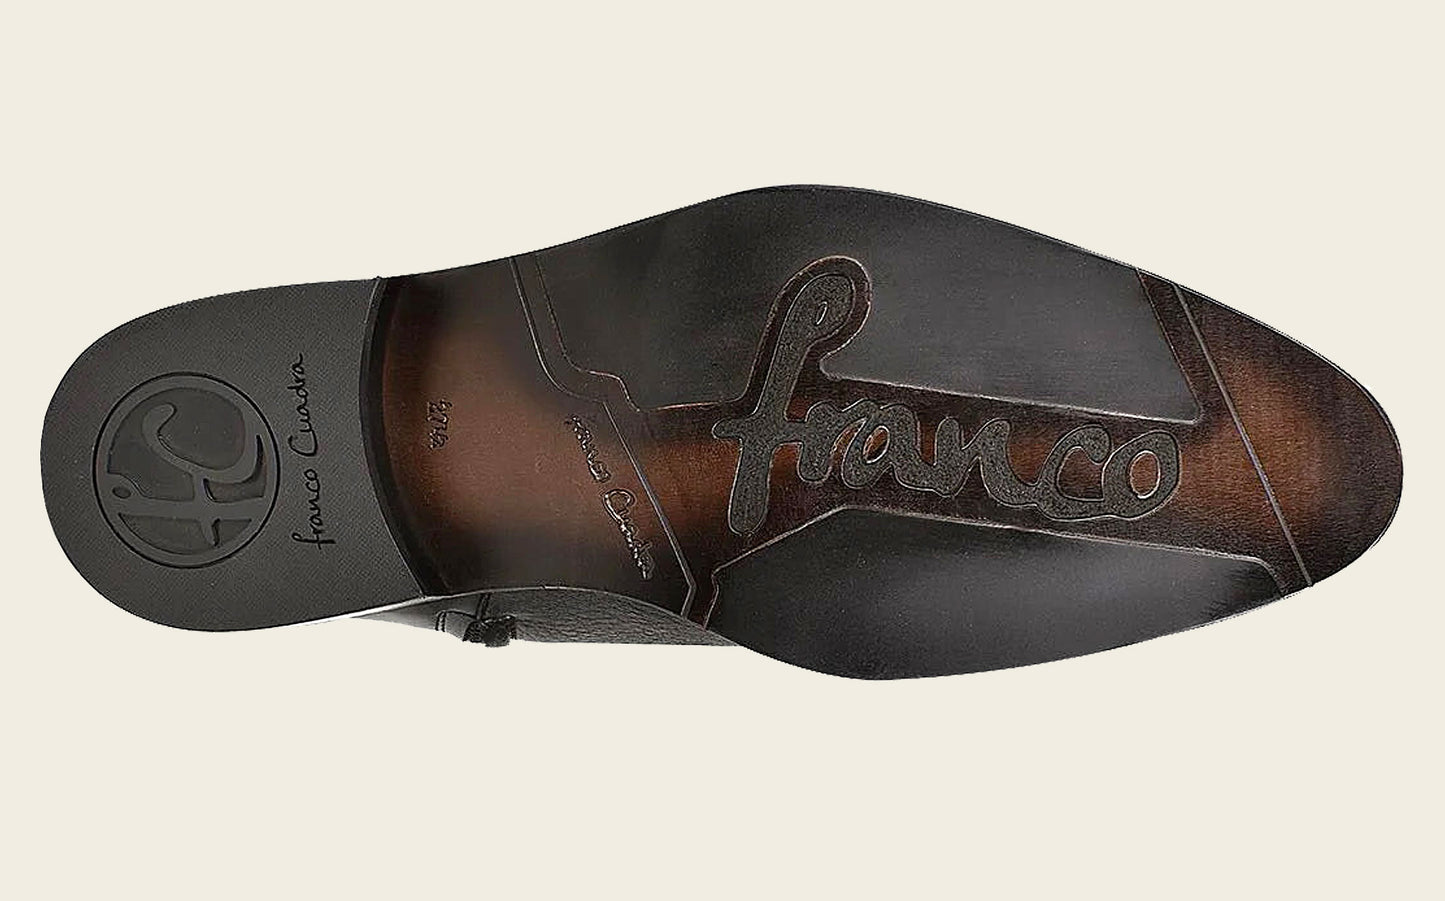 Internal closure & TPU sole: Comfort & confidence in Cuadra's black boots.